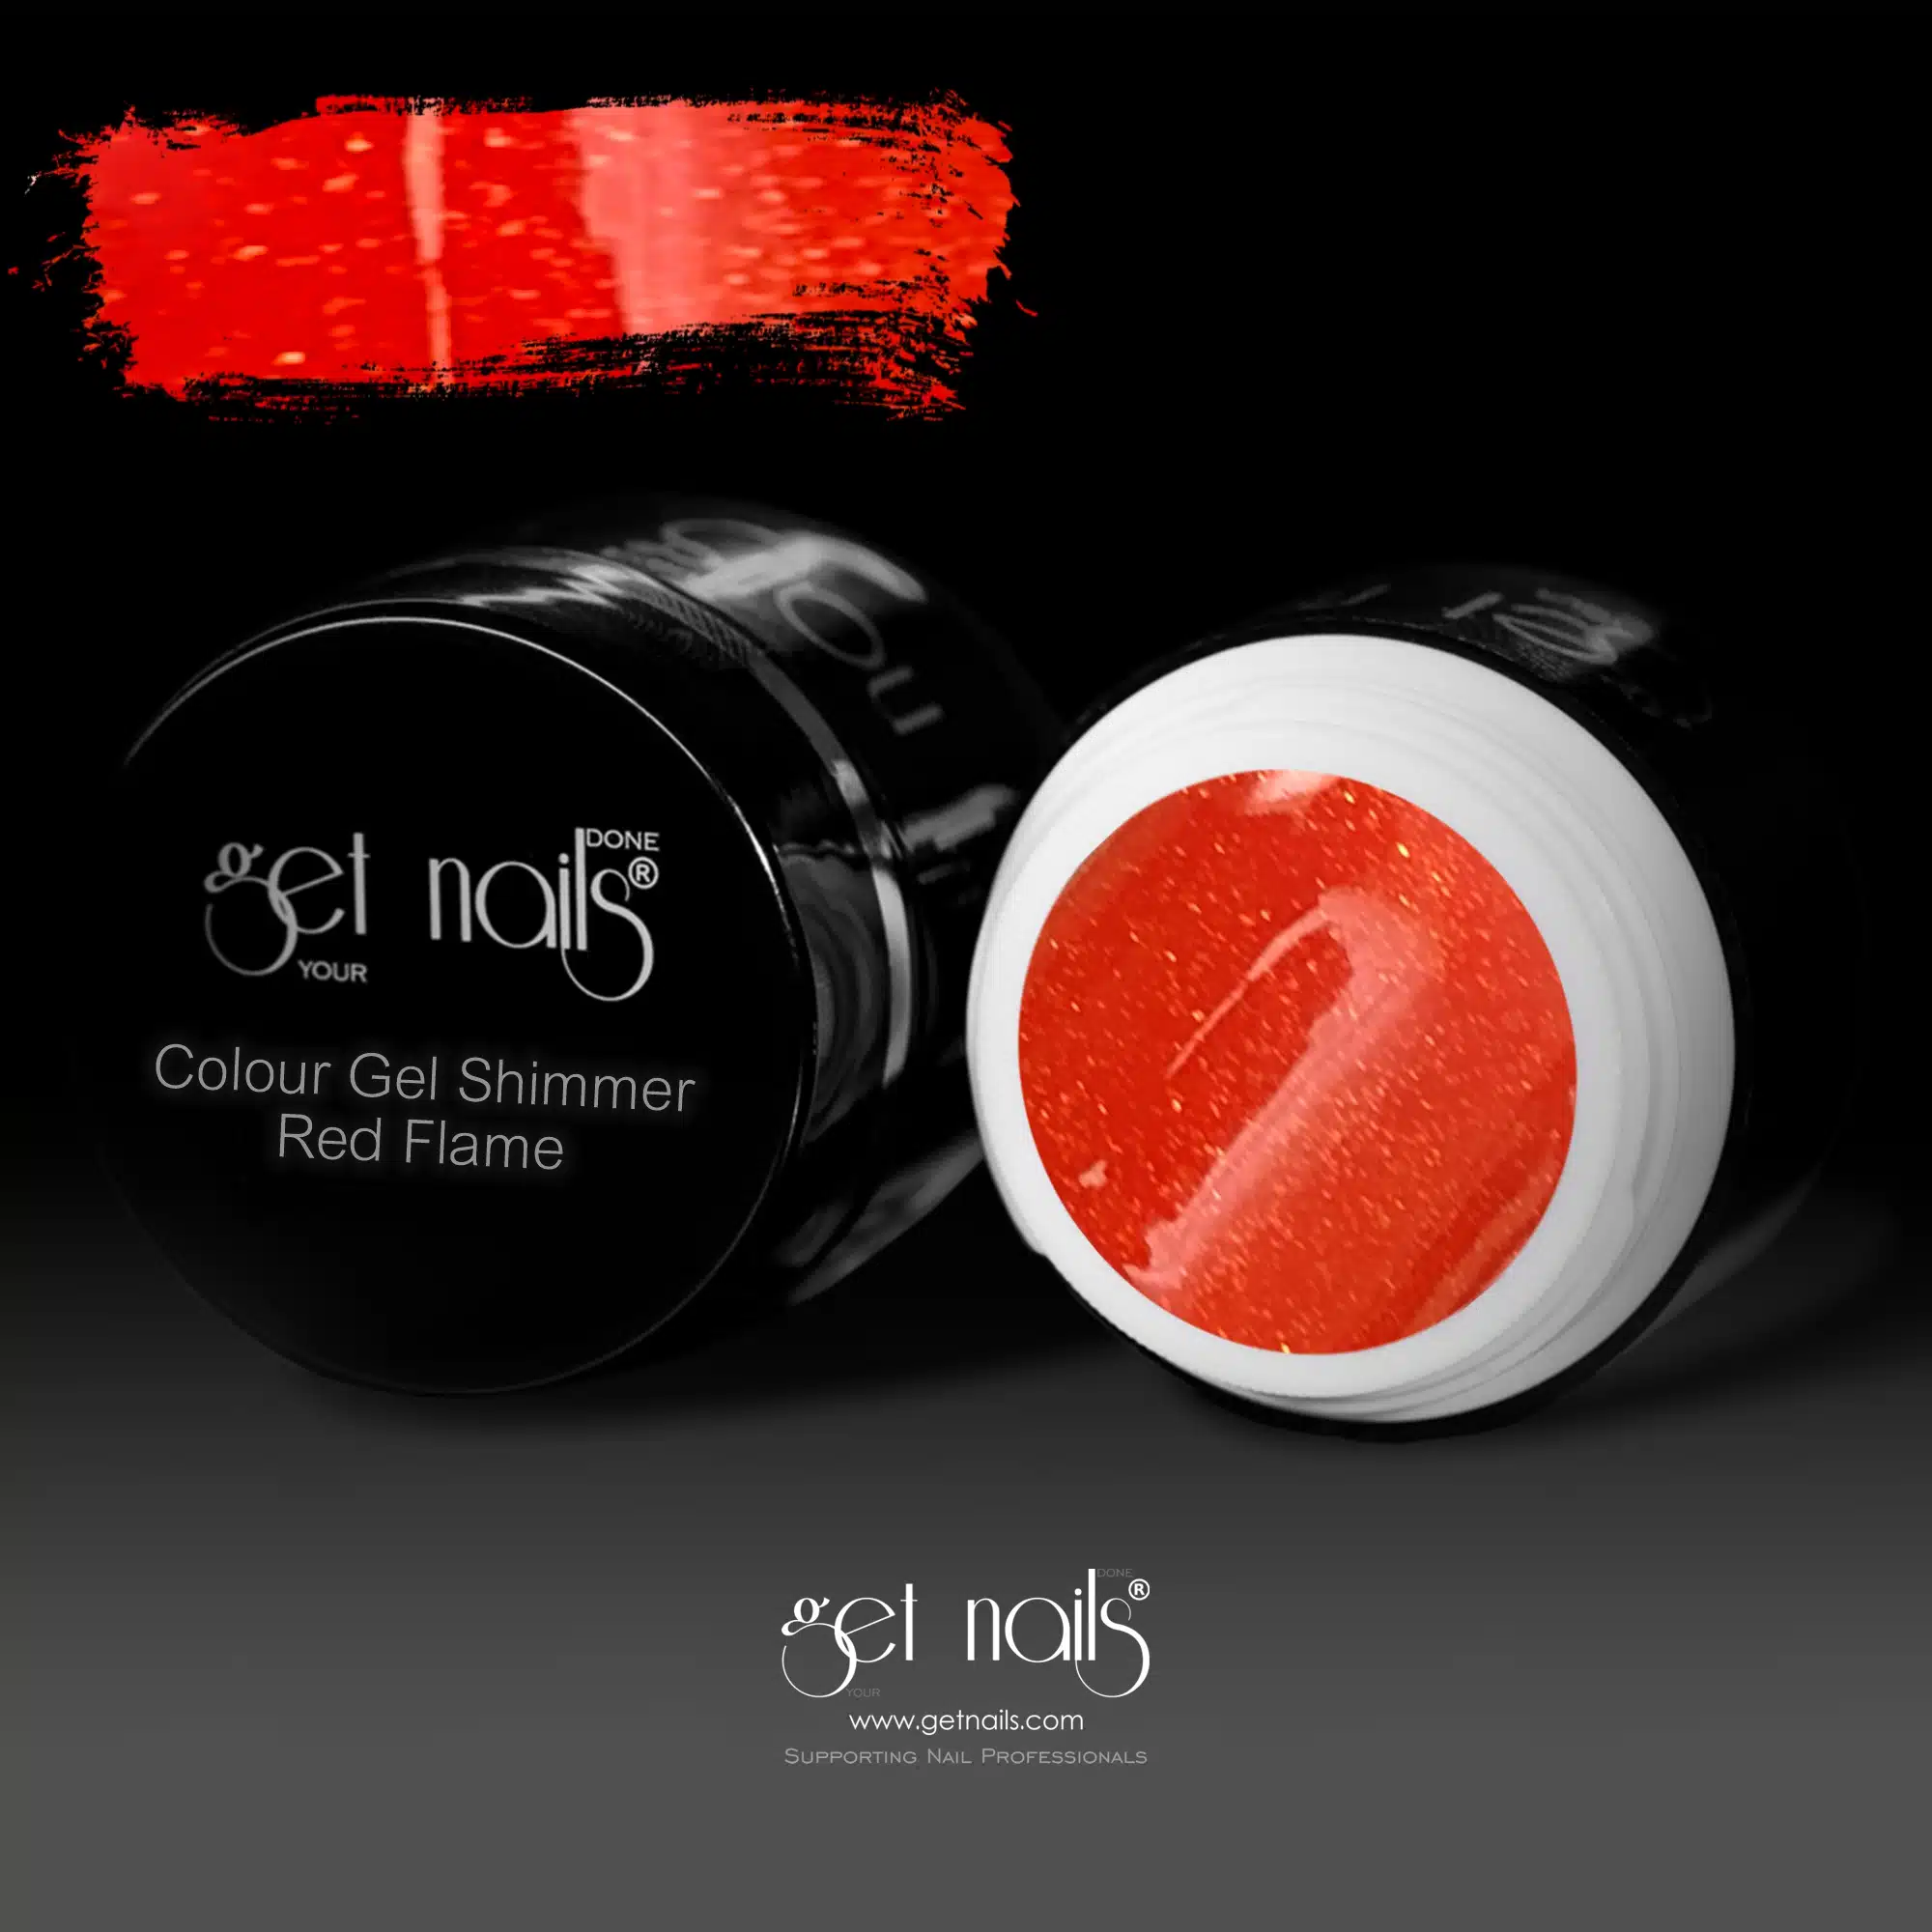 Get Nails Austria - Colour Gel Shimmer Red Flame 5g